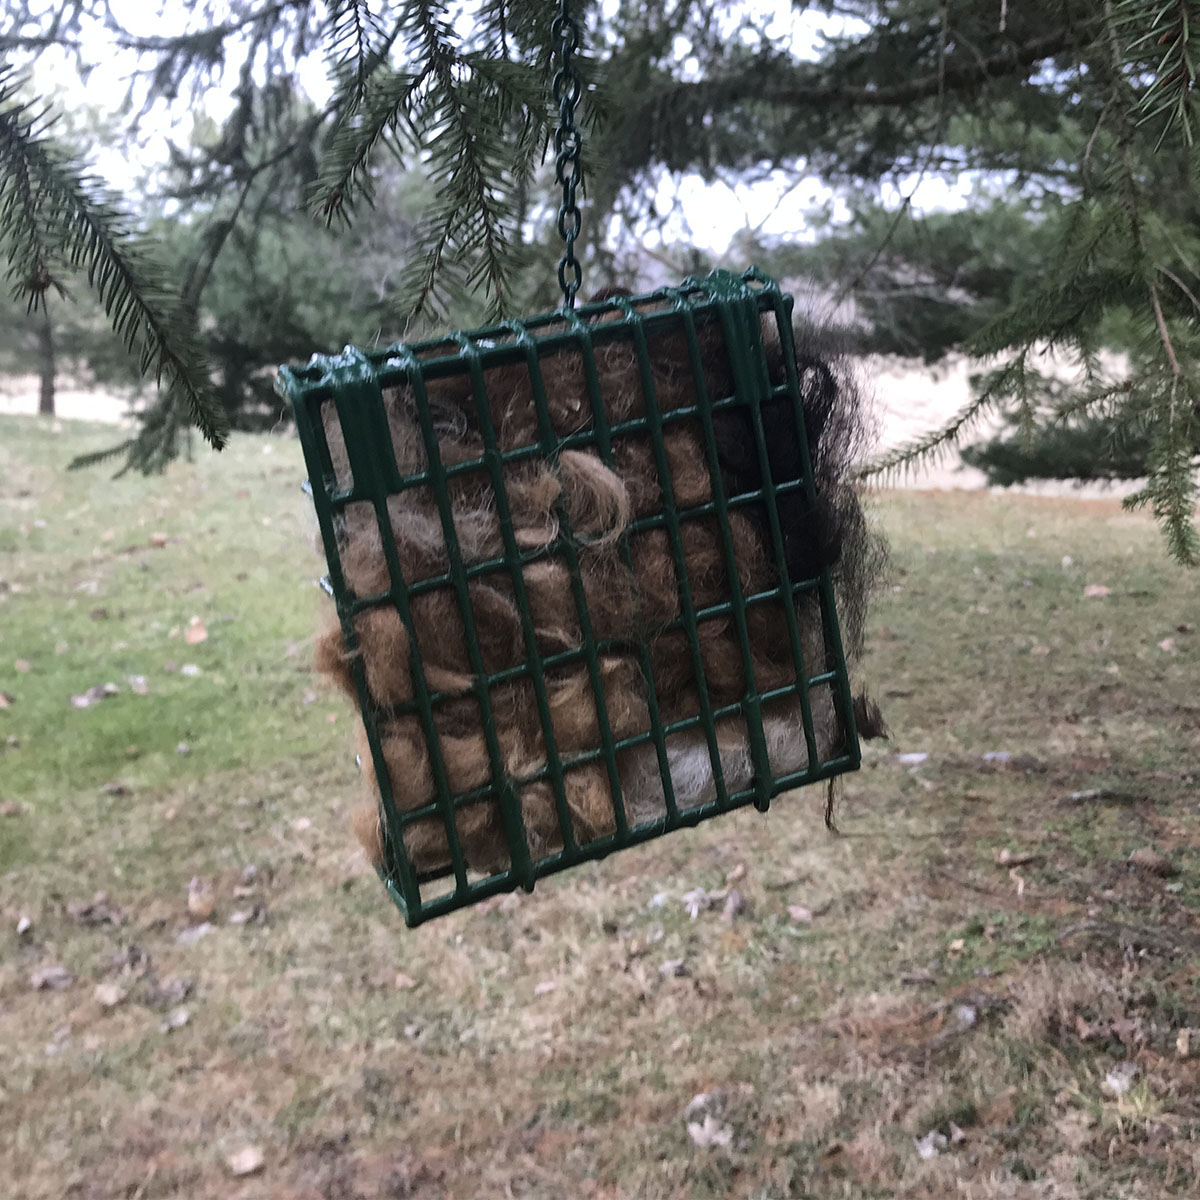 Suet cage filled with alpaca fleece